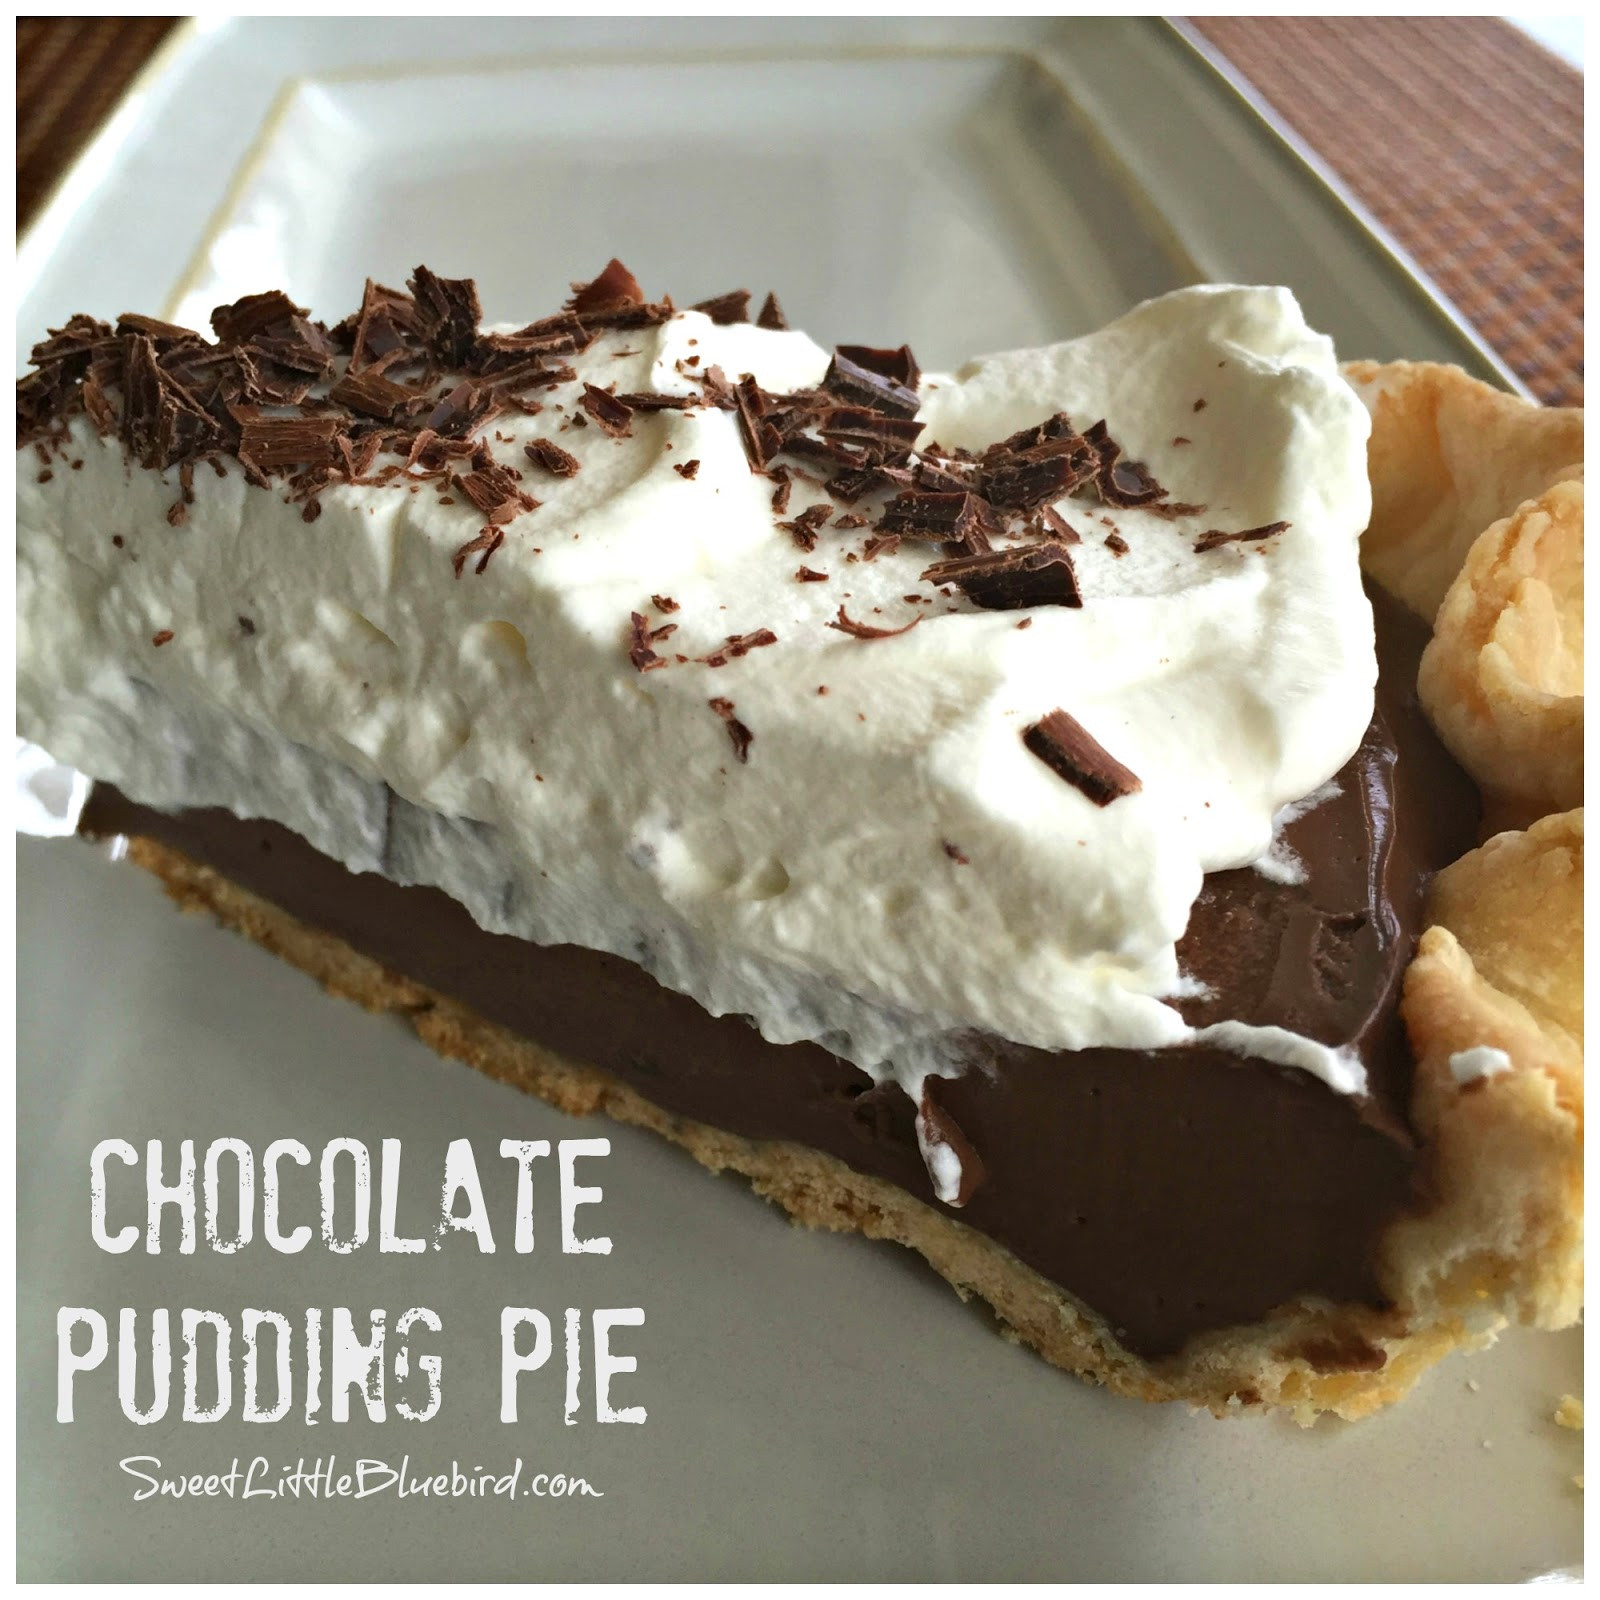 Chocolate Pudding Pie Recipe
 The Best Homemade Chocolate Pudding Pie Sweet Little